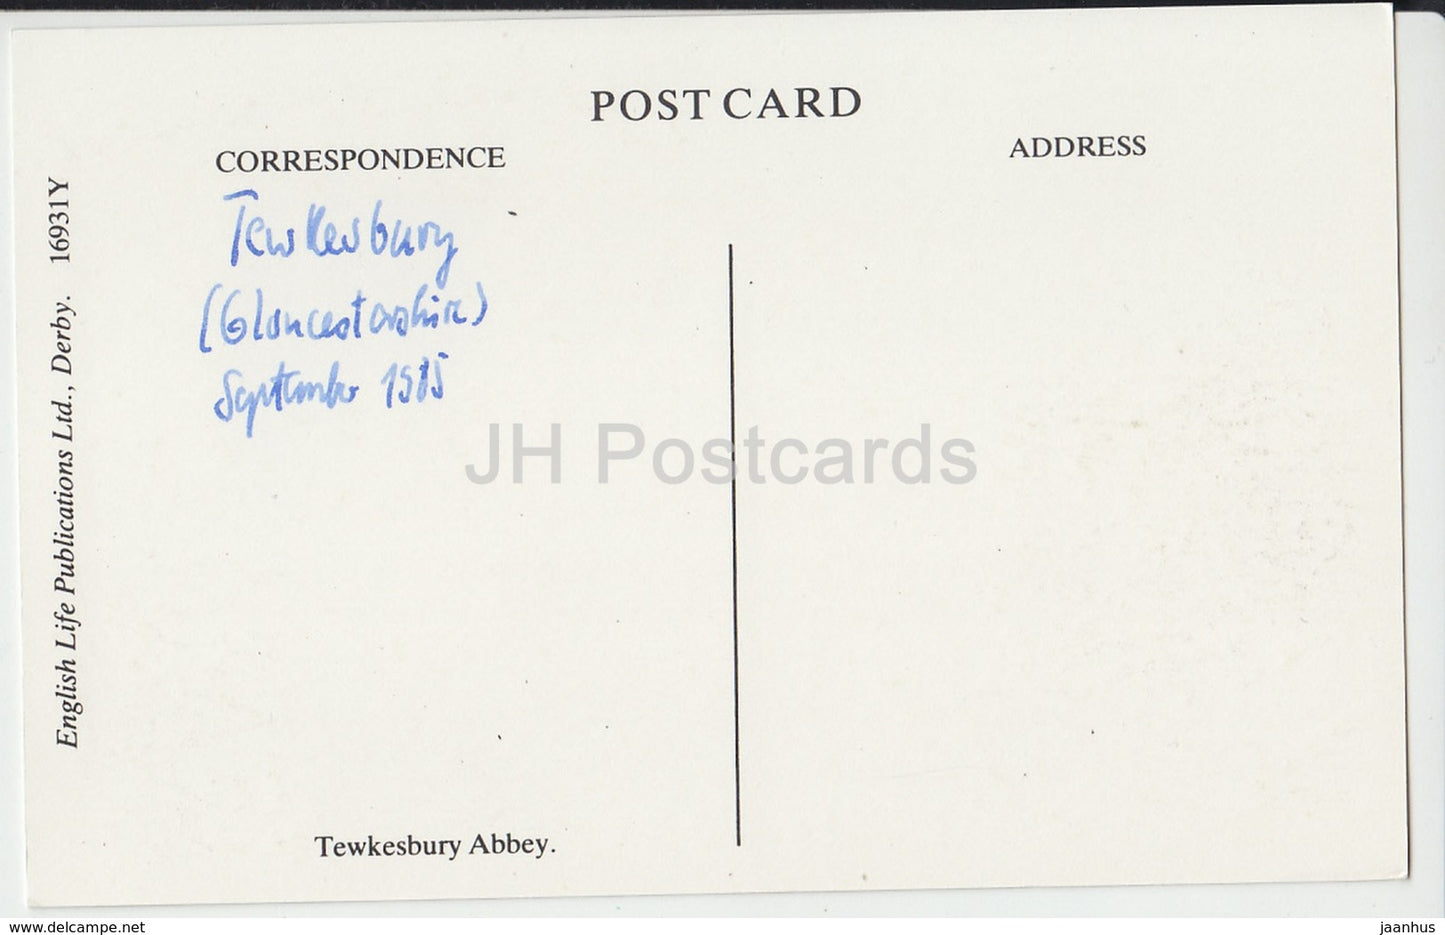 Tewkesbury Abbey - 1985 - United Kingdom - England - used